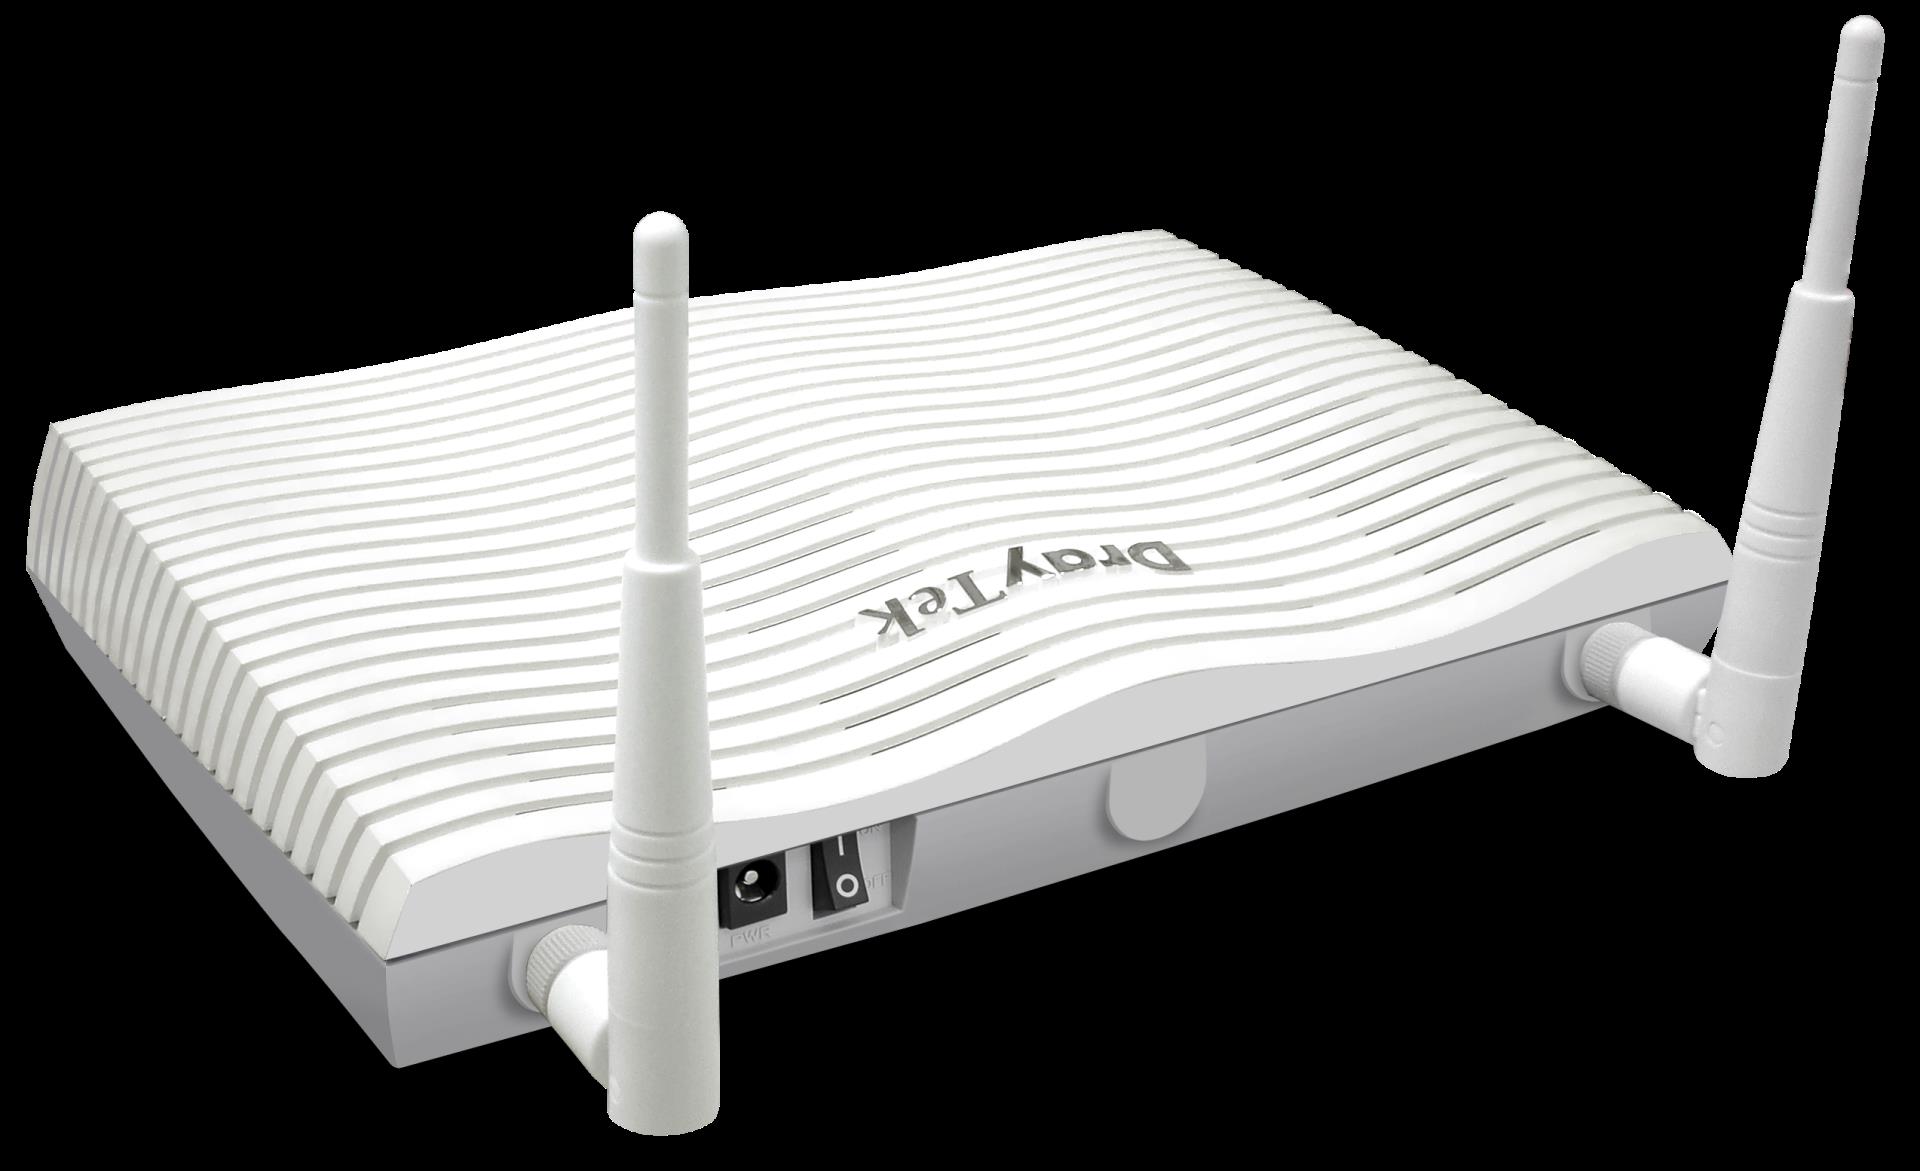 DrayTek Vigor 2866Vac Dual-Wan Router mit integriertem G.Fast/VDSL2/Supervectoring/ADSL Modem als WAN1 und Gigabit Ethernet WAN2, 5 x Gigabit LAN, 32xVPN, Firewall, Contentfilter, zentralem AP- und Switchmanagement, VoIP mit 2x FXS-Ports (V2866VAX-DE-AT-CH)